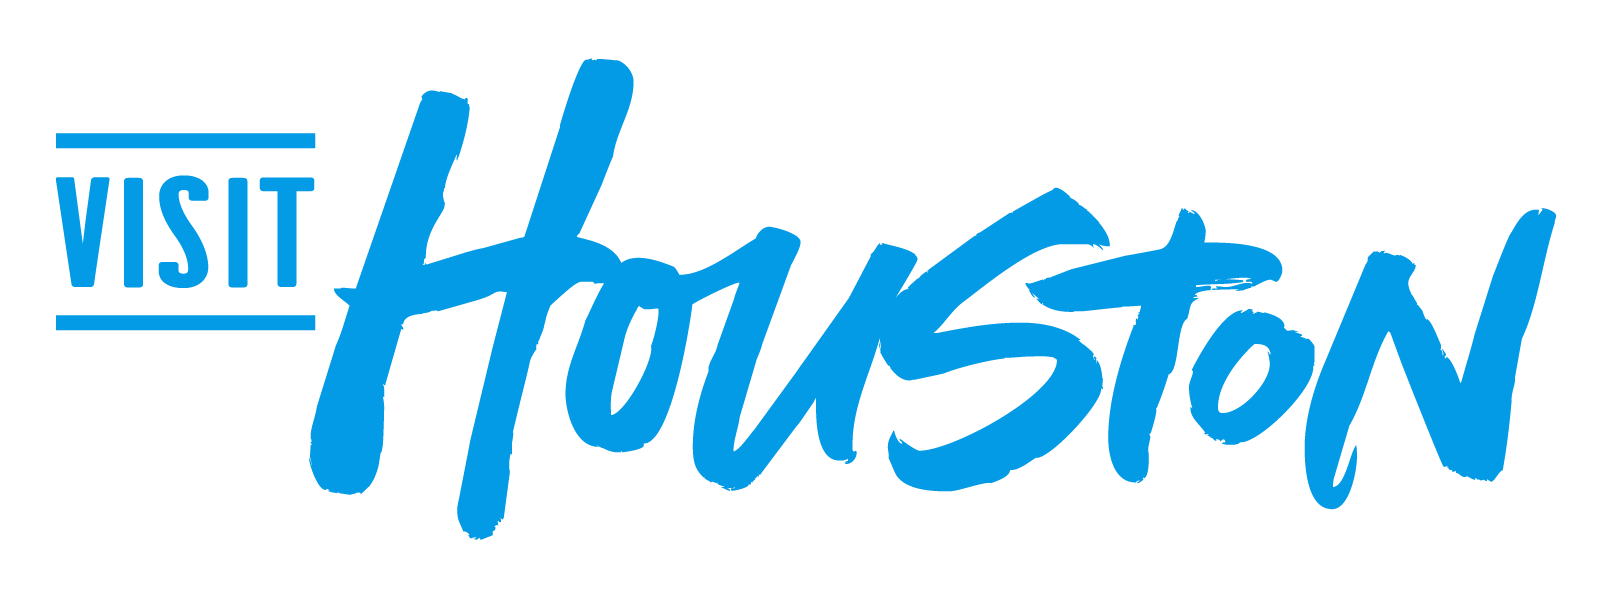 Visit Houston Blue logo